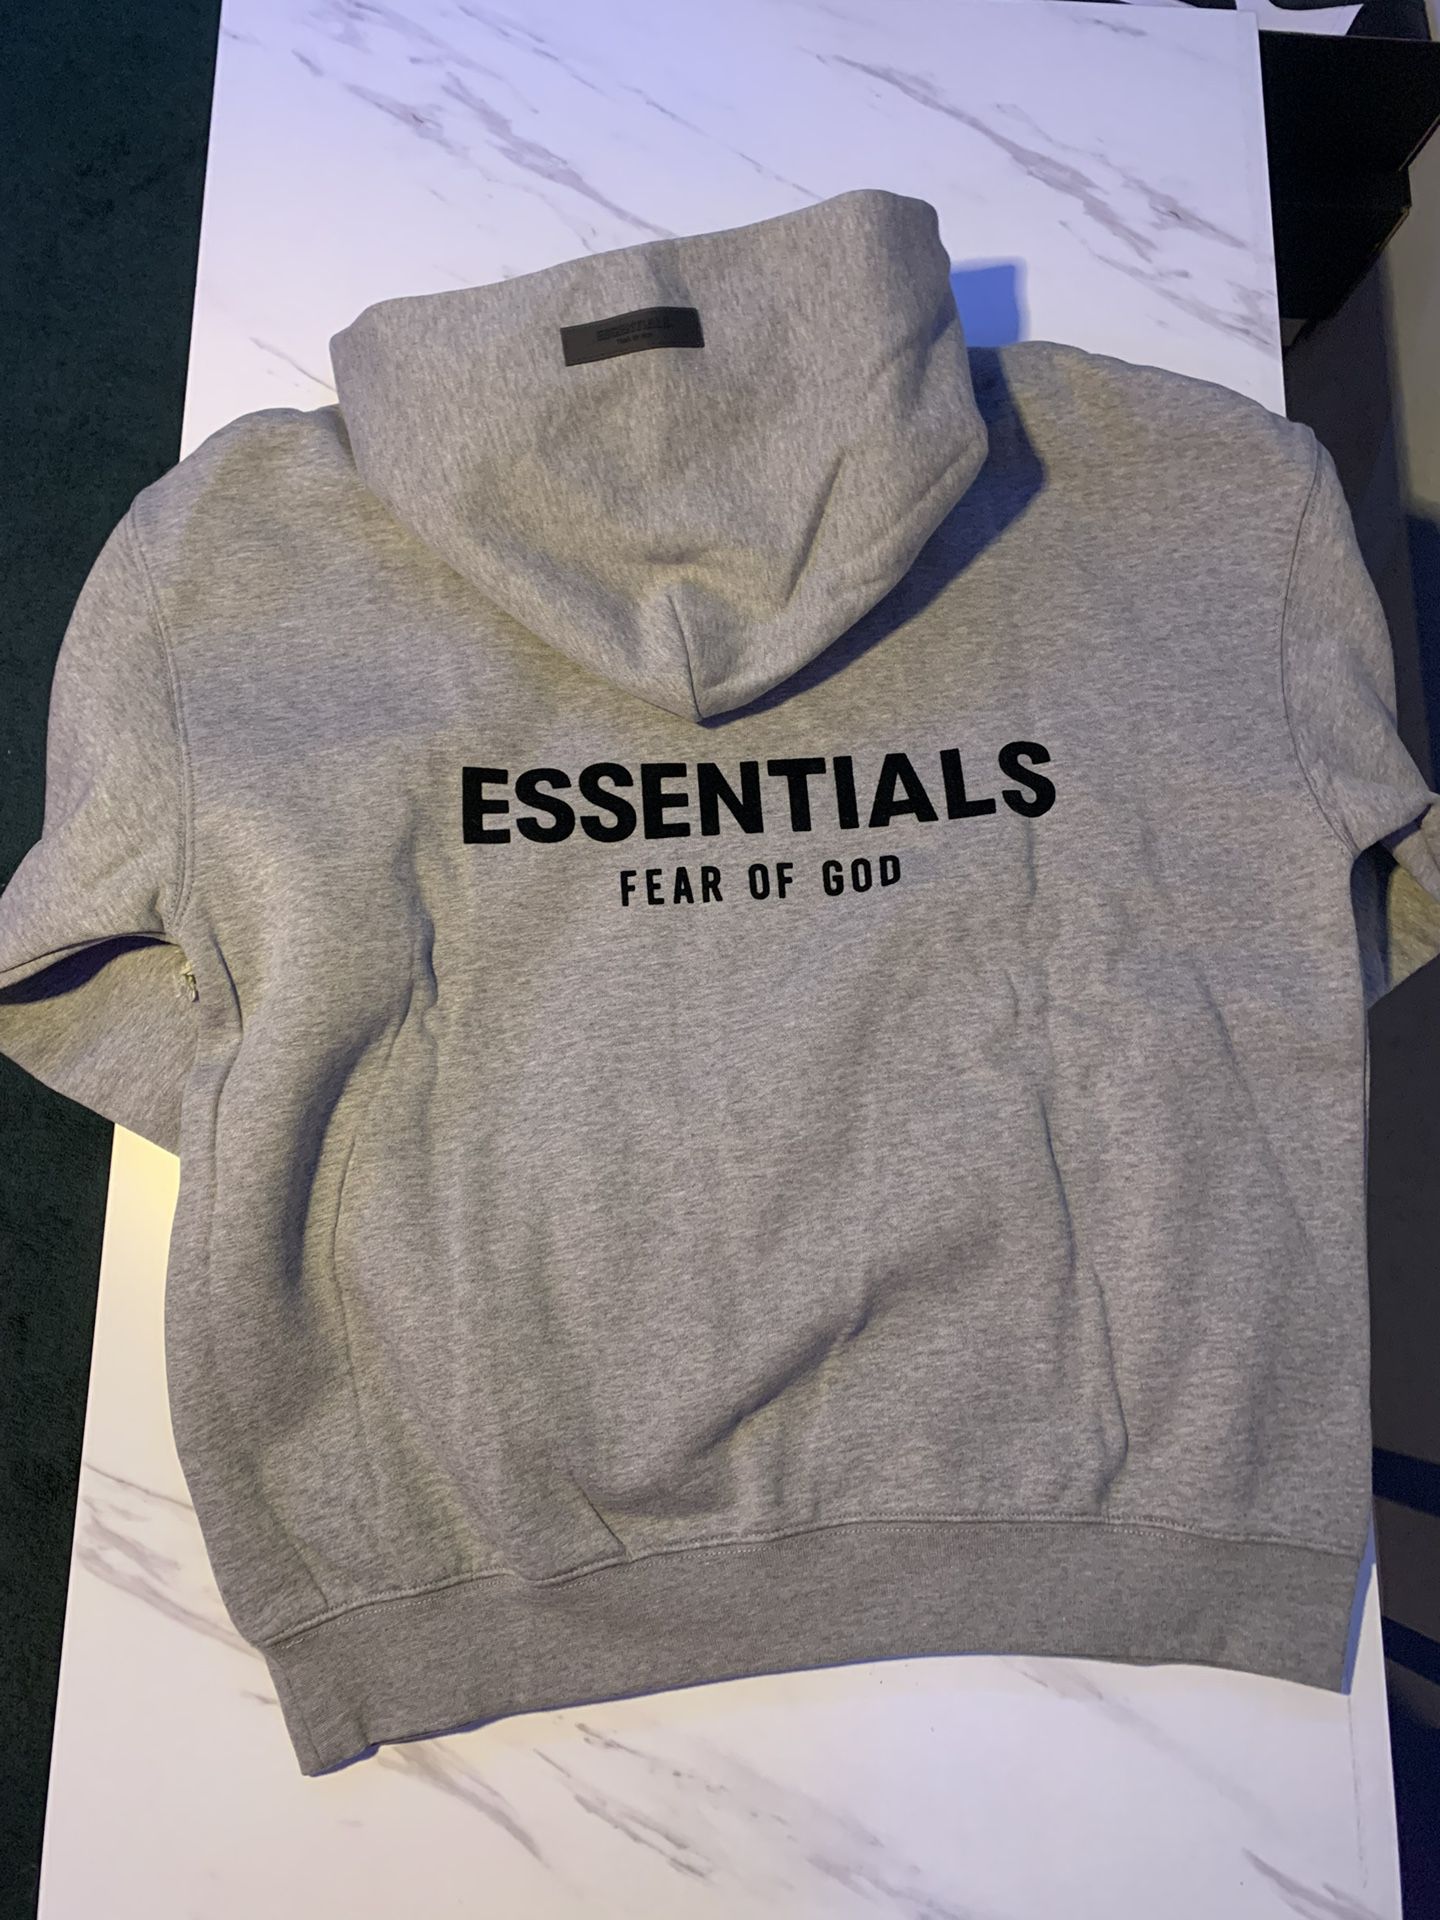 Essentials Pull over hoodies